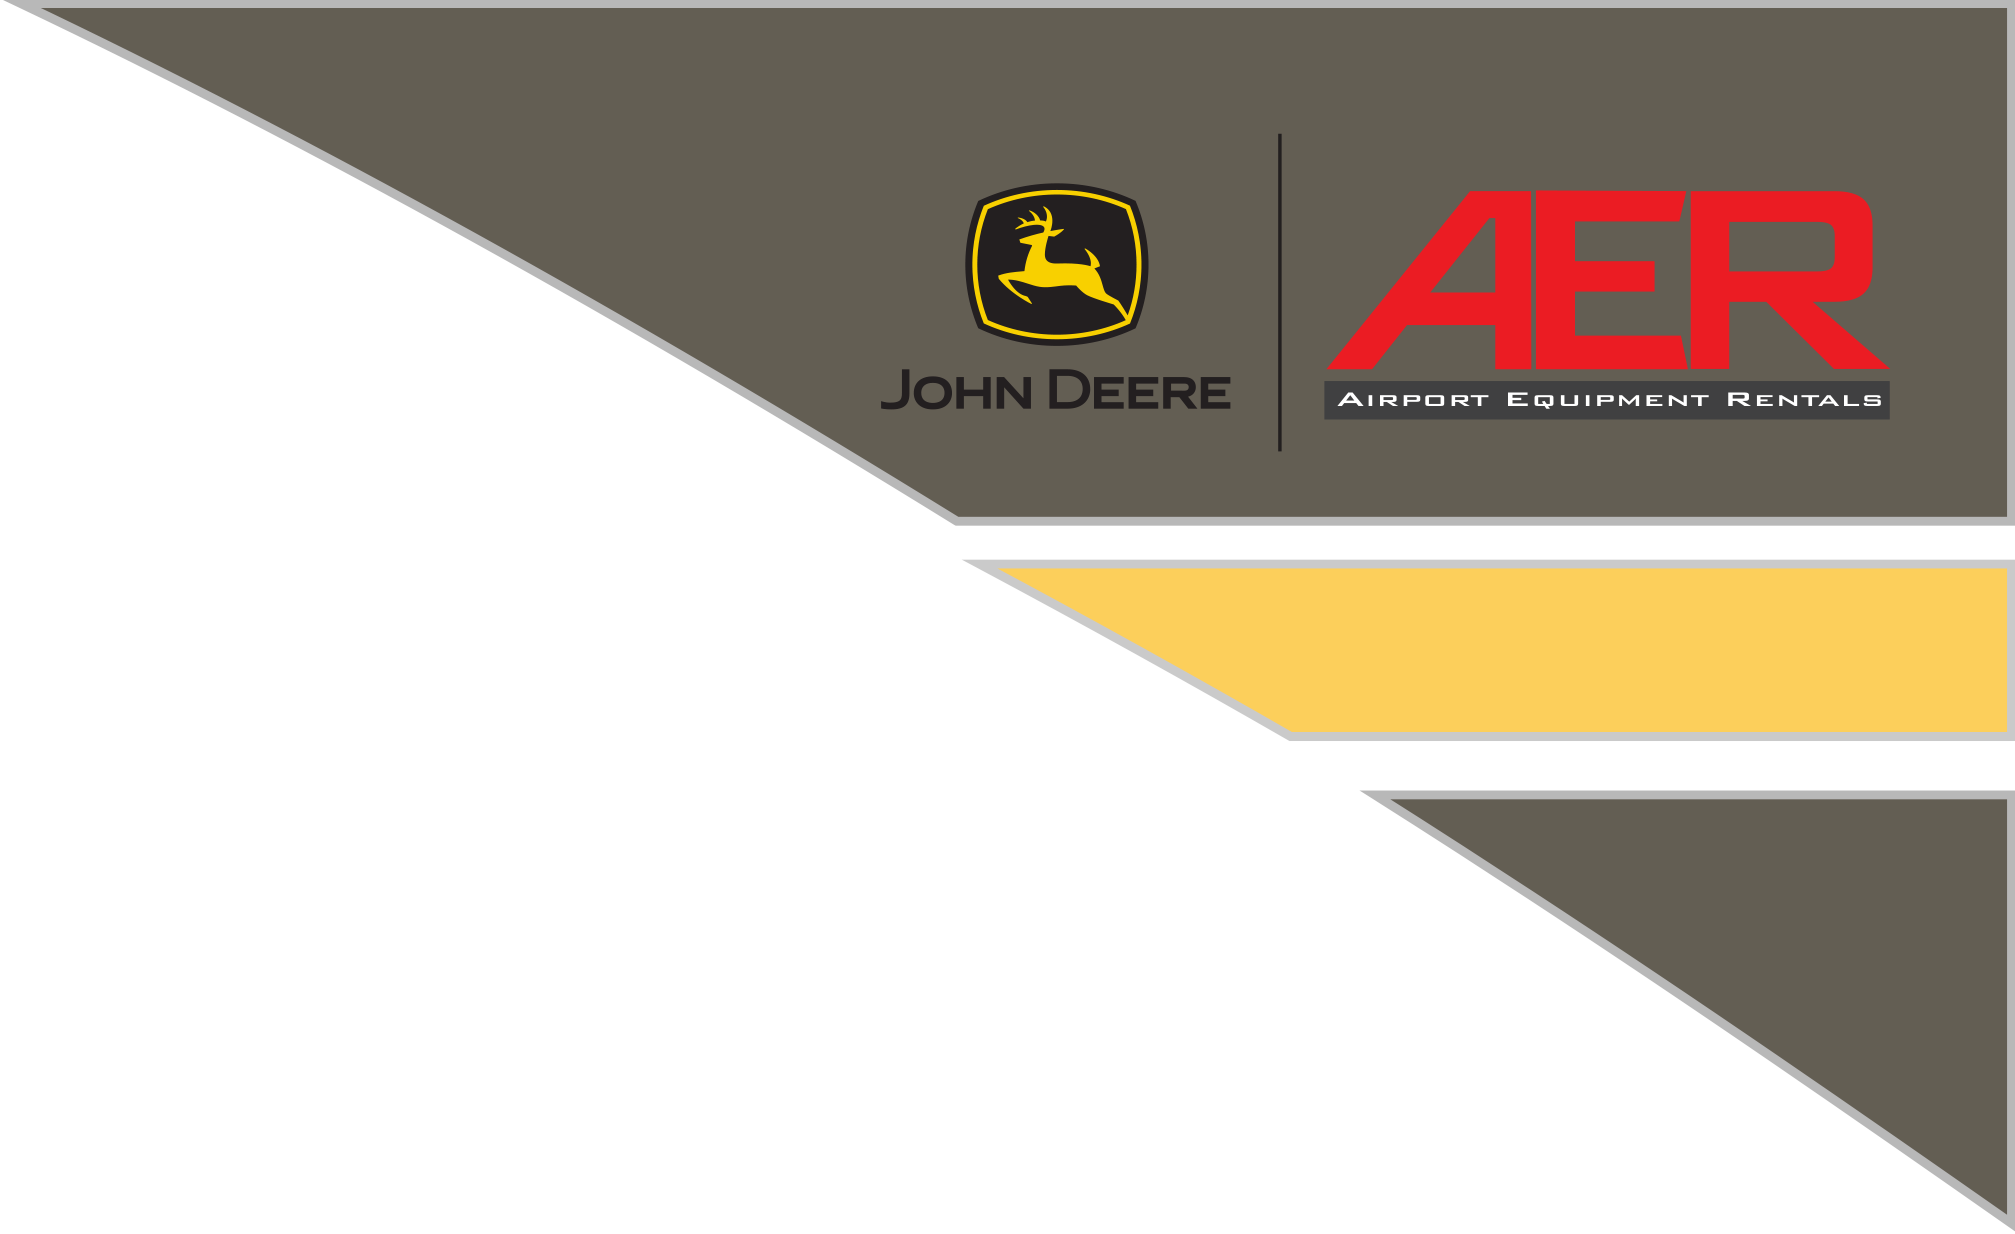 Airport Equipment Rentals & John Deere logos